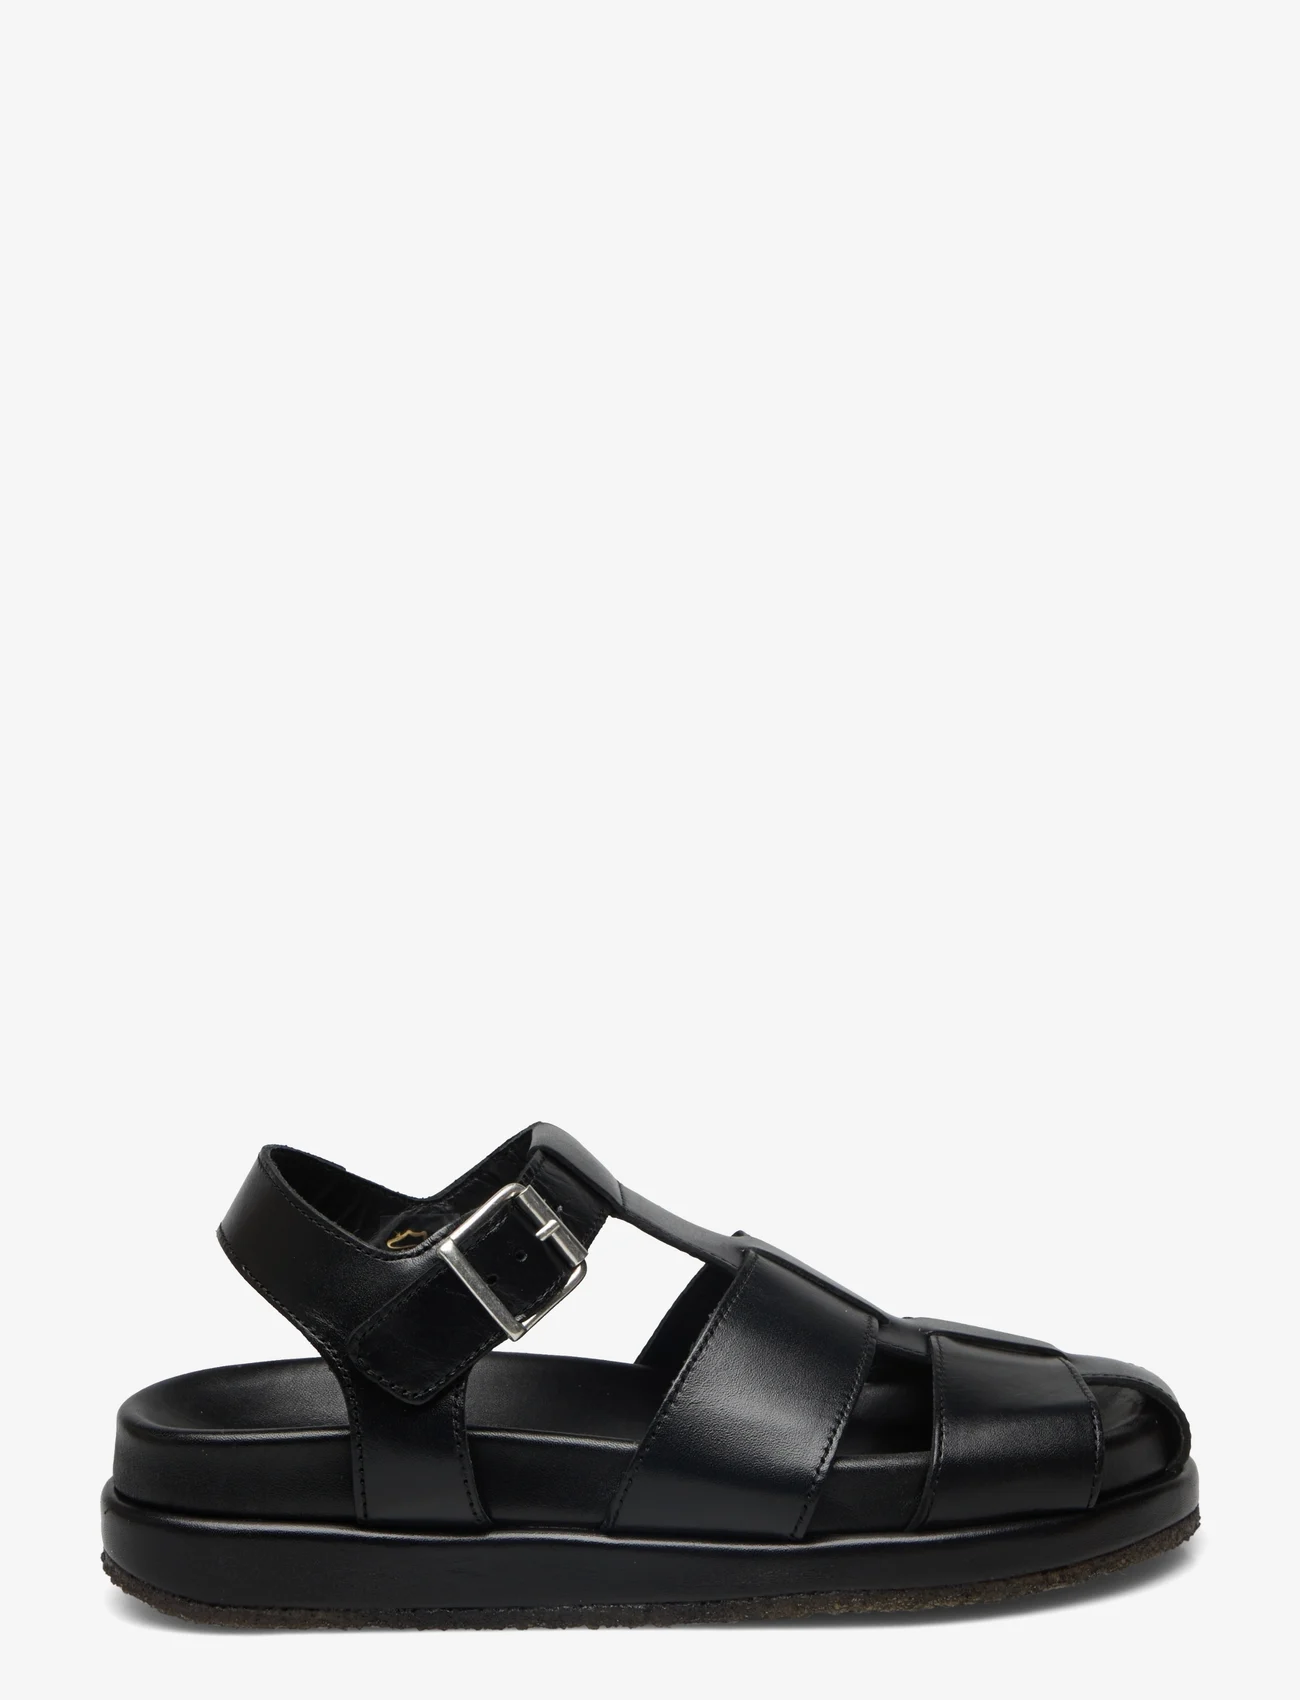 ANGULUS - Sandals - flat - open toe - op - kontsata sandaalid - 1604/1785 black - 1